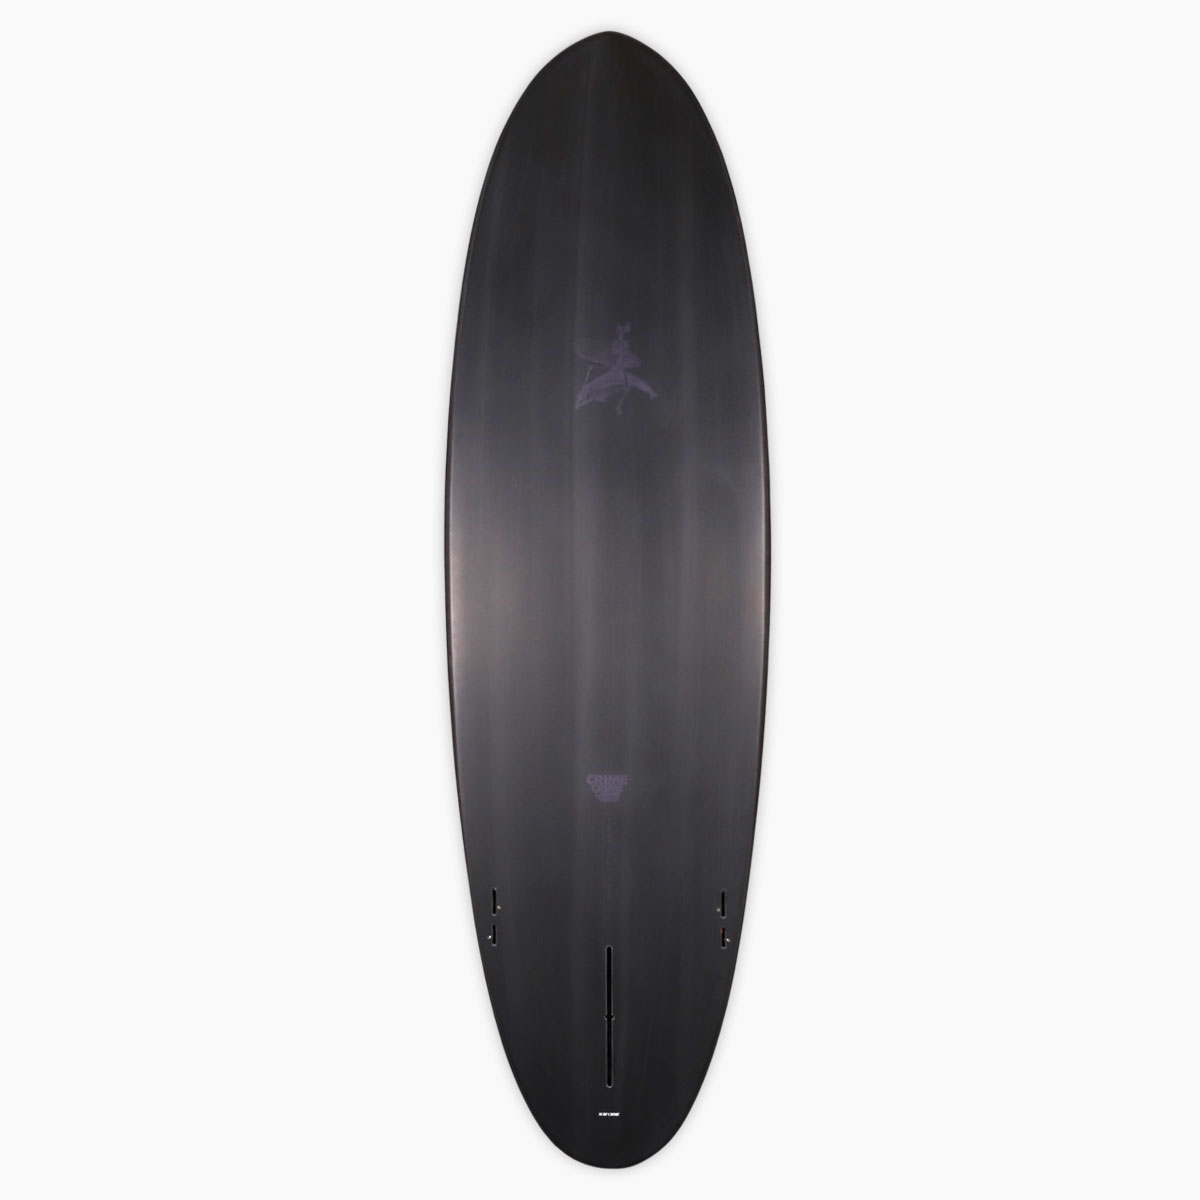 SurfBoardNet / ブランド:CRIME SURFBOARDS モデル:GOTHIC DOLPHINS